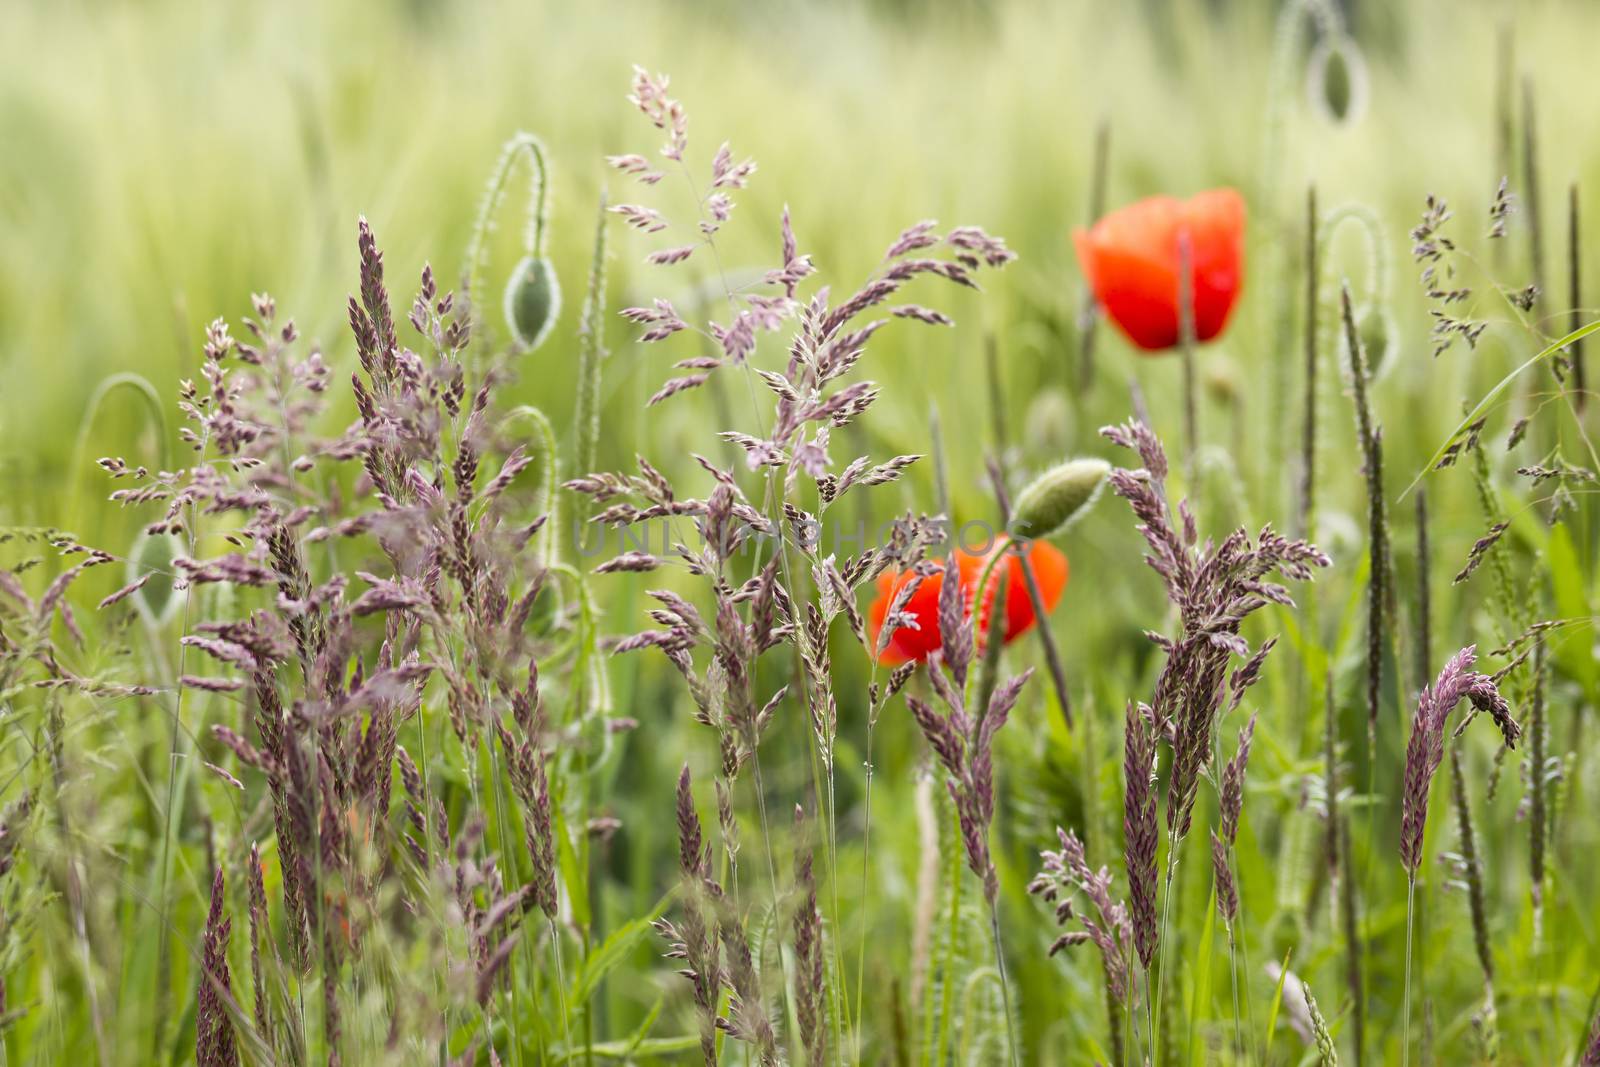 barley field with grass and wild poppies by miradrozdowski